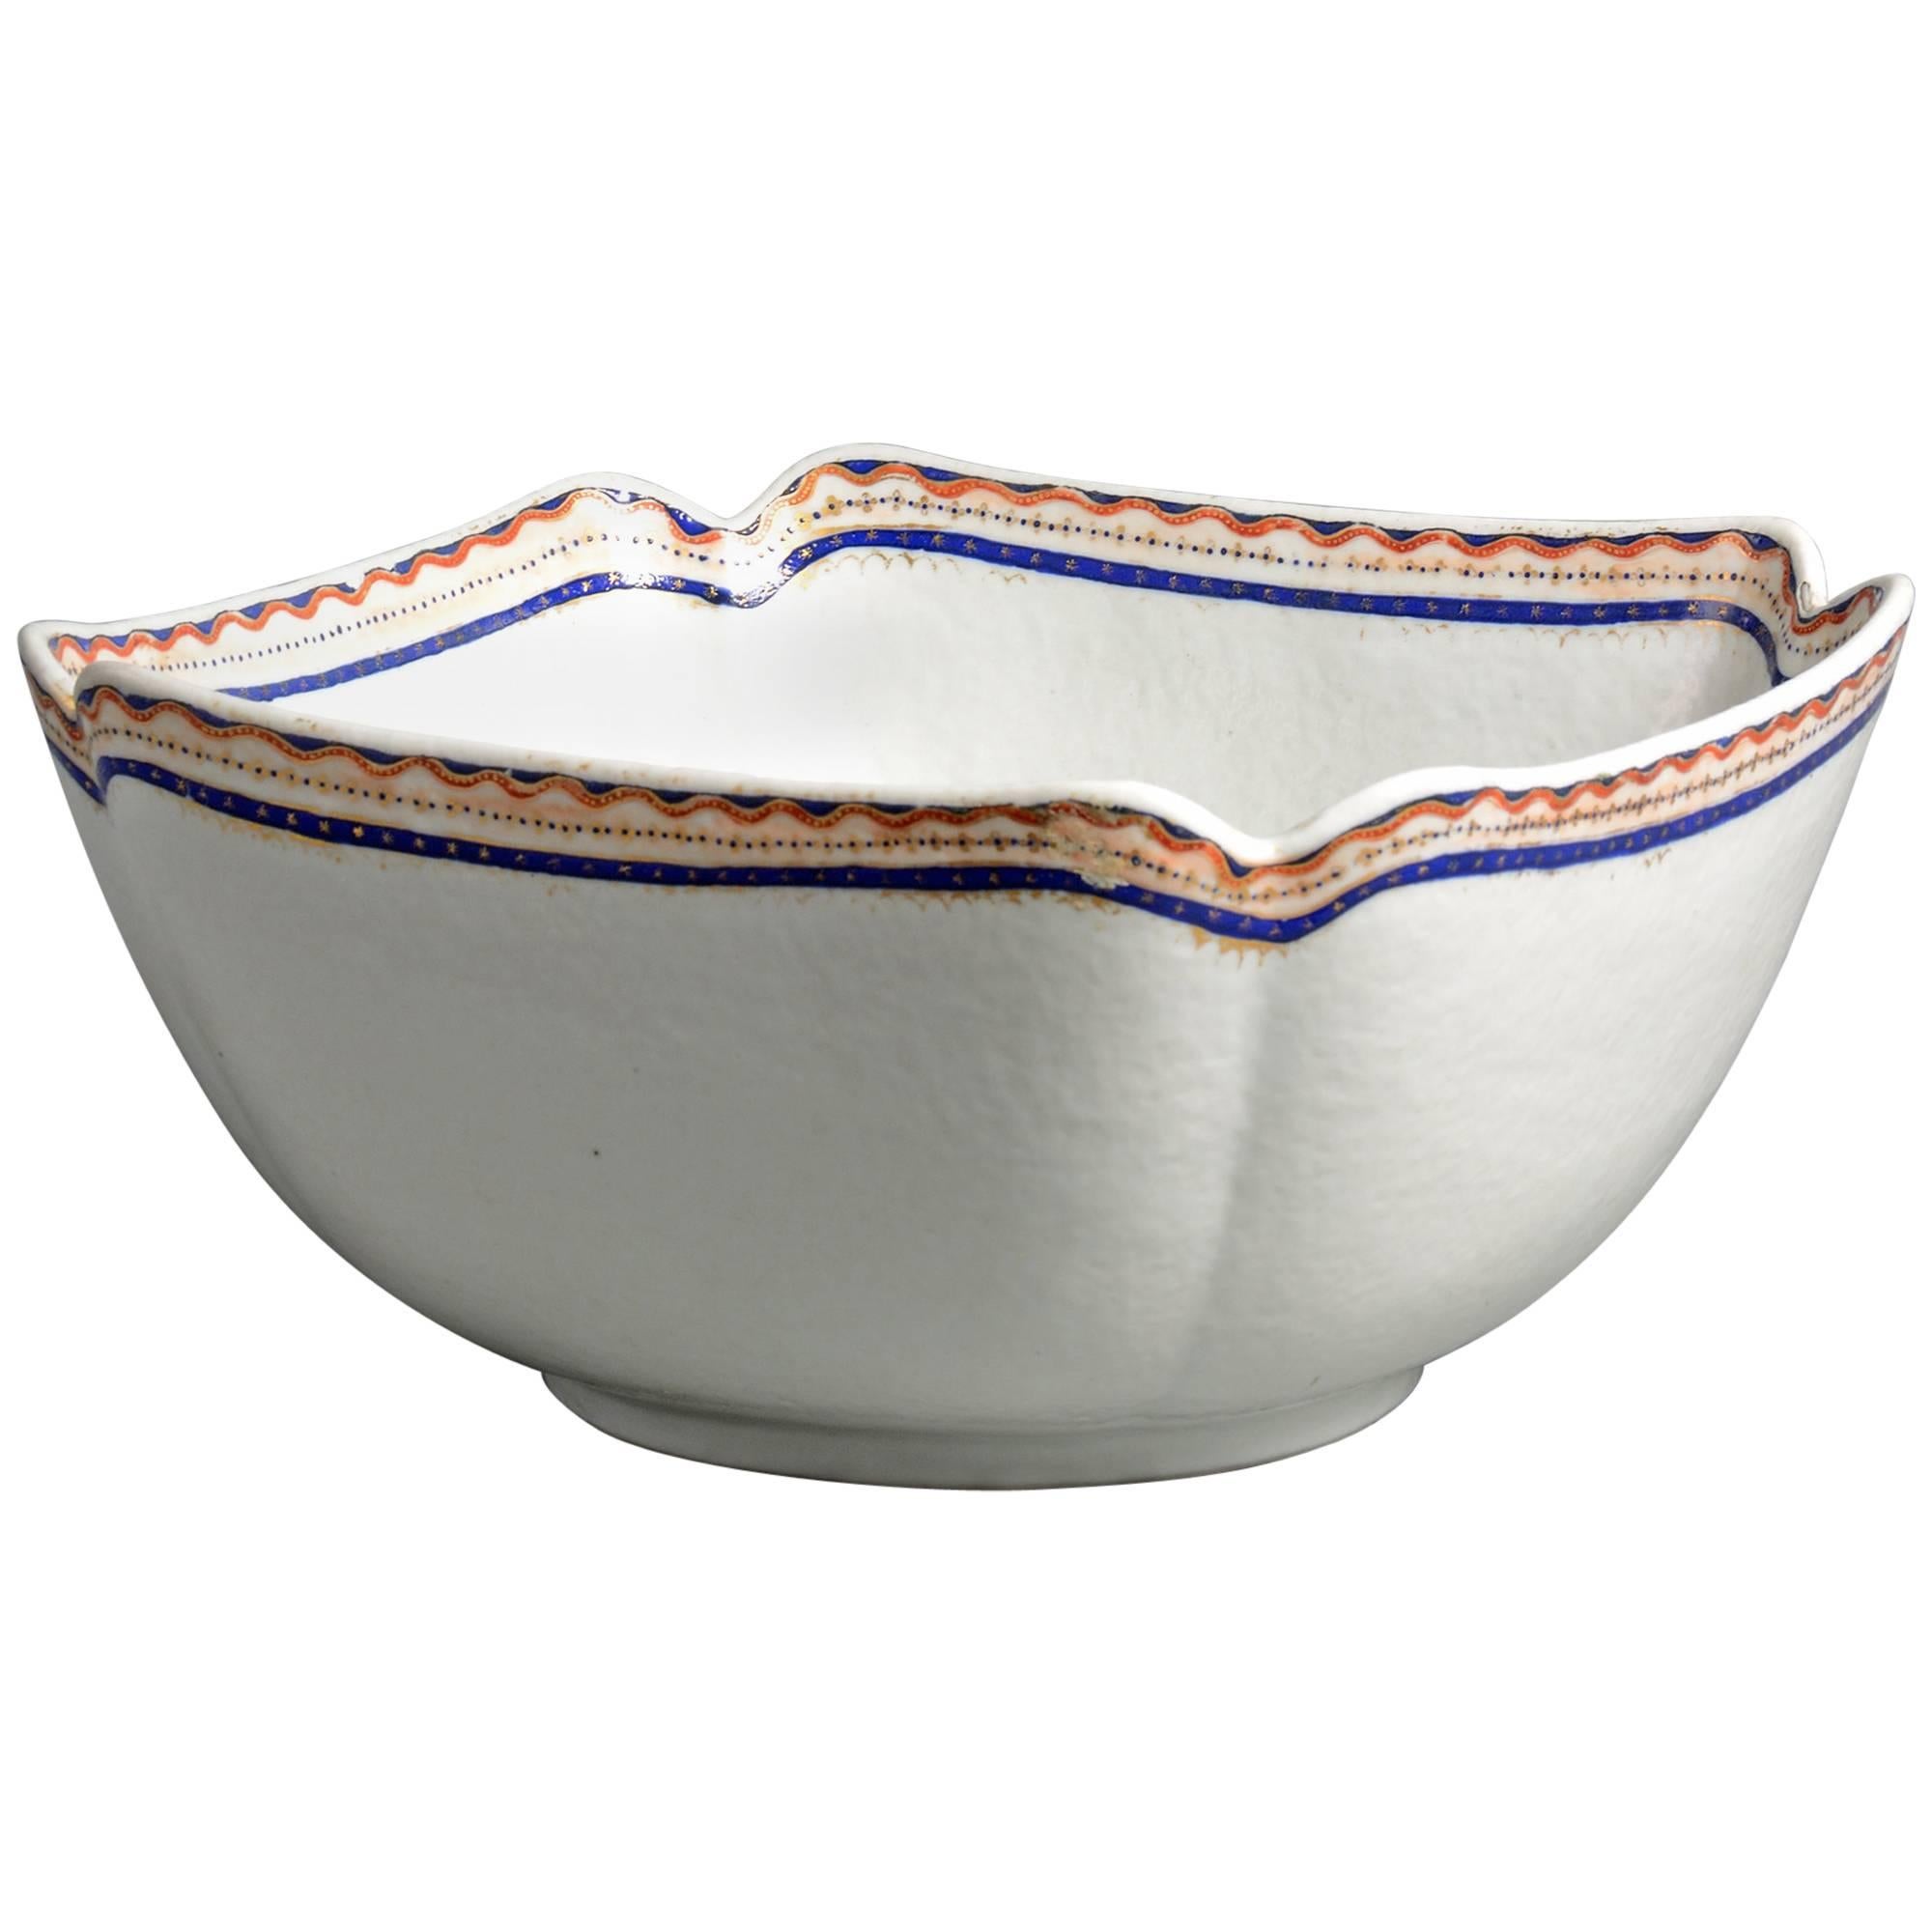 Late 18th Century Square Porcelain Bowl